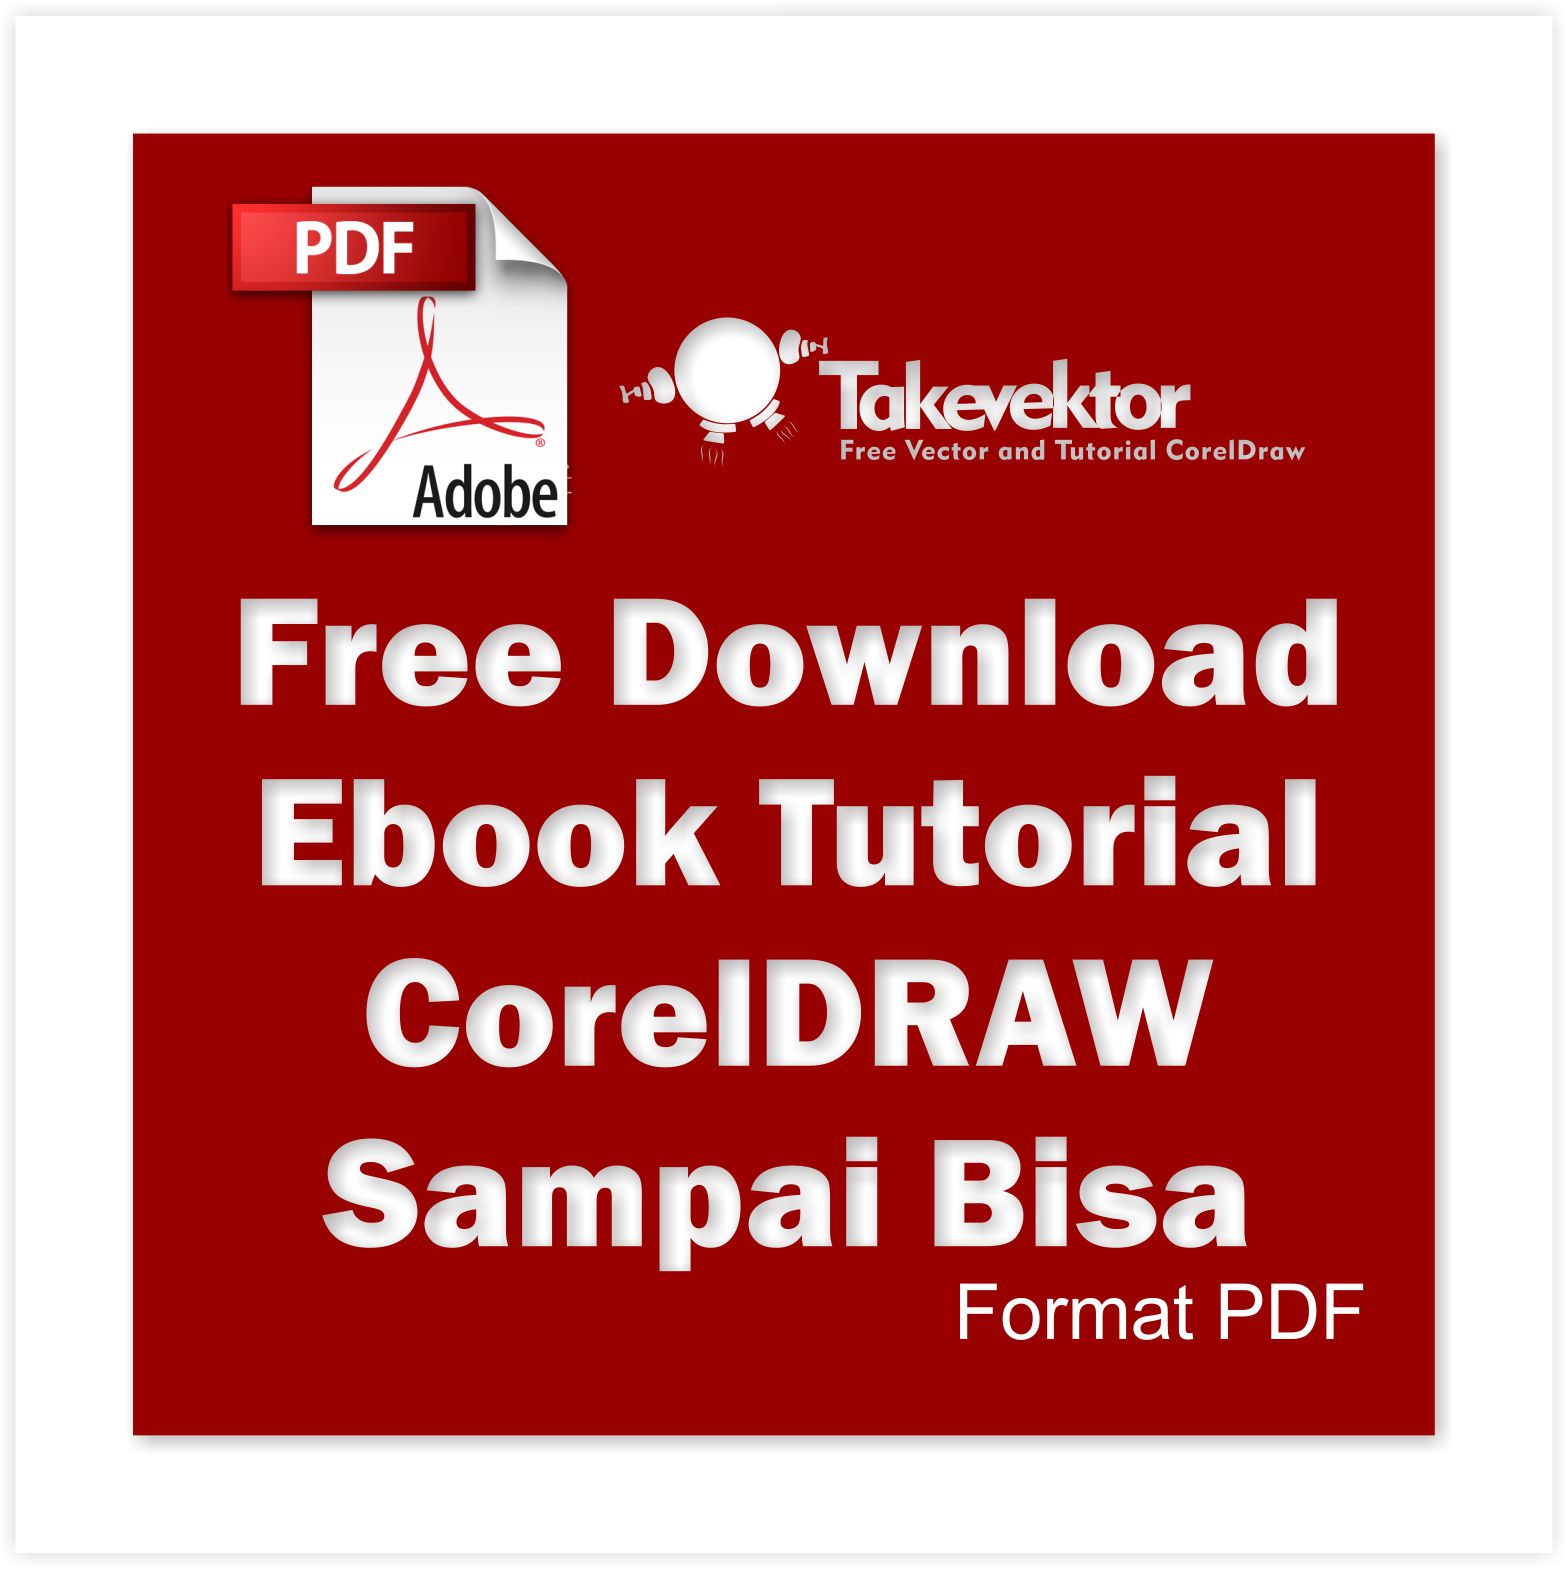 coreldraw handout download pdf